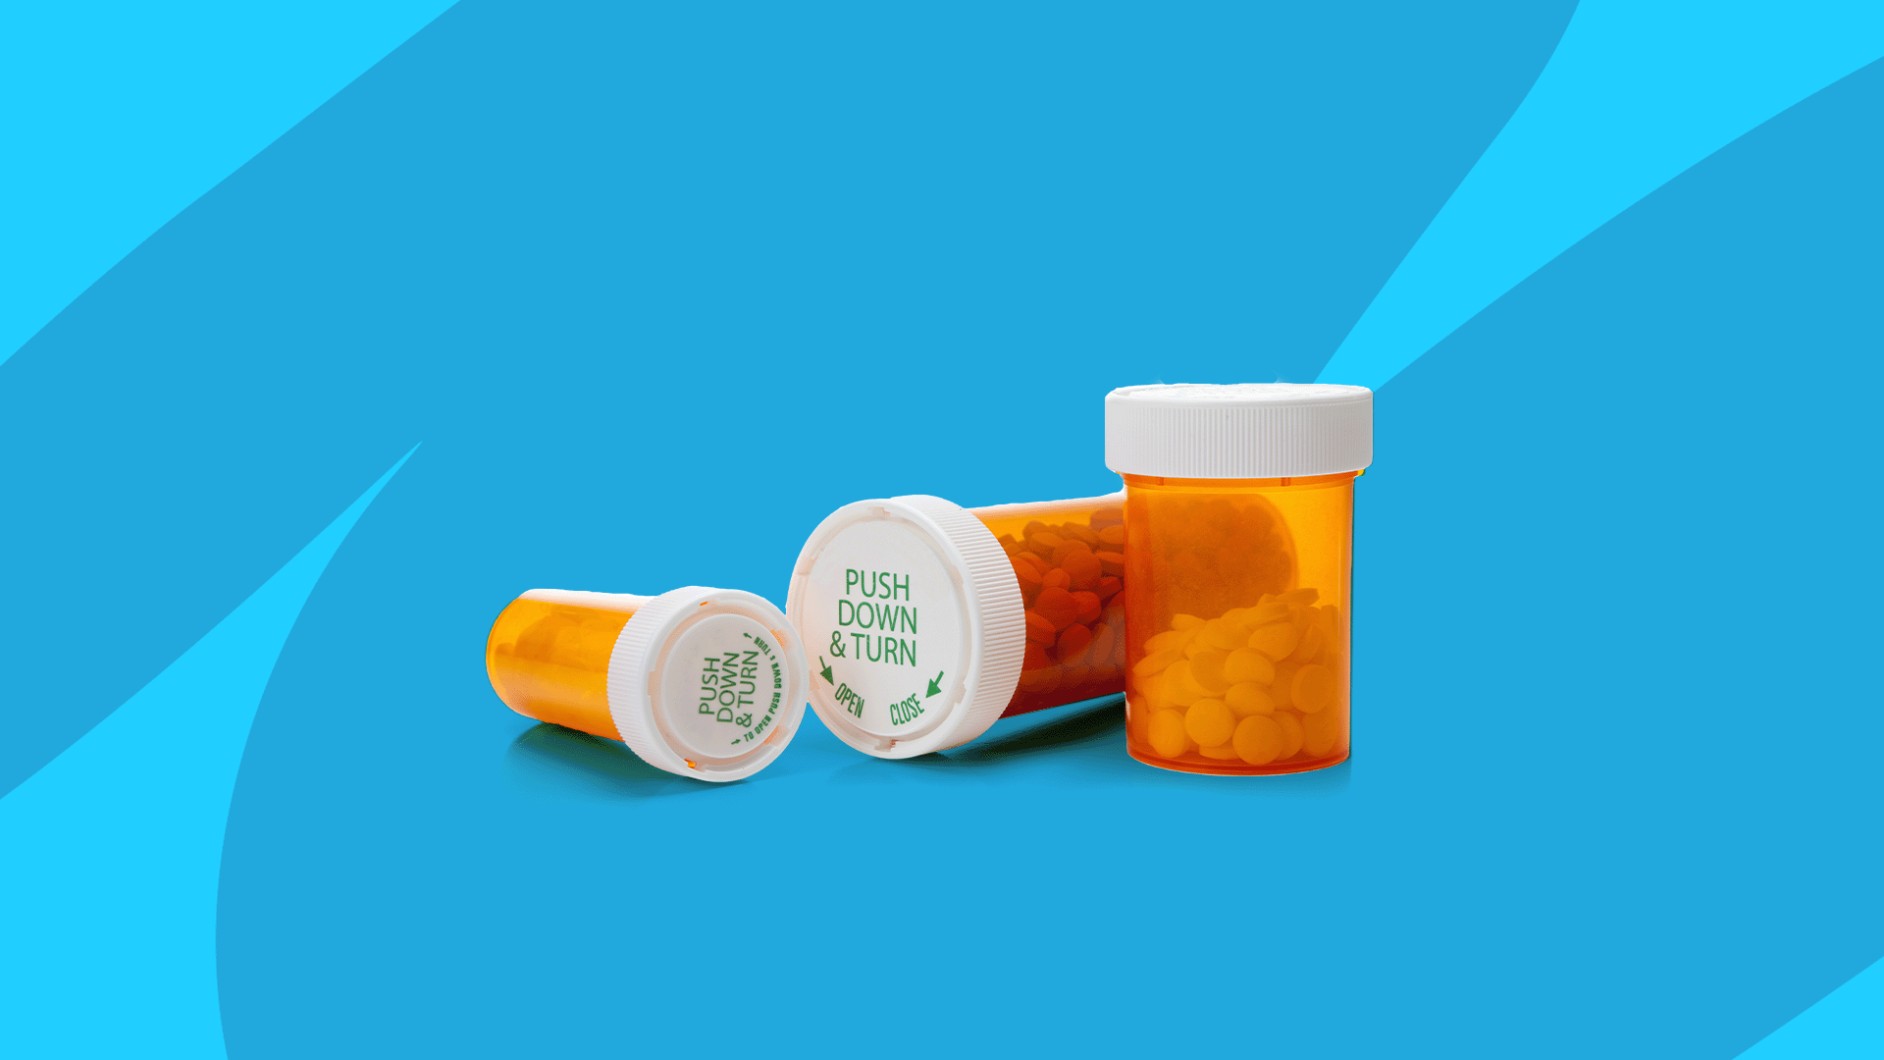 Scattered pill bottles: Baclofan interactions